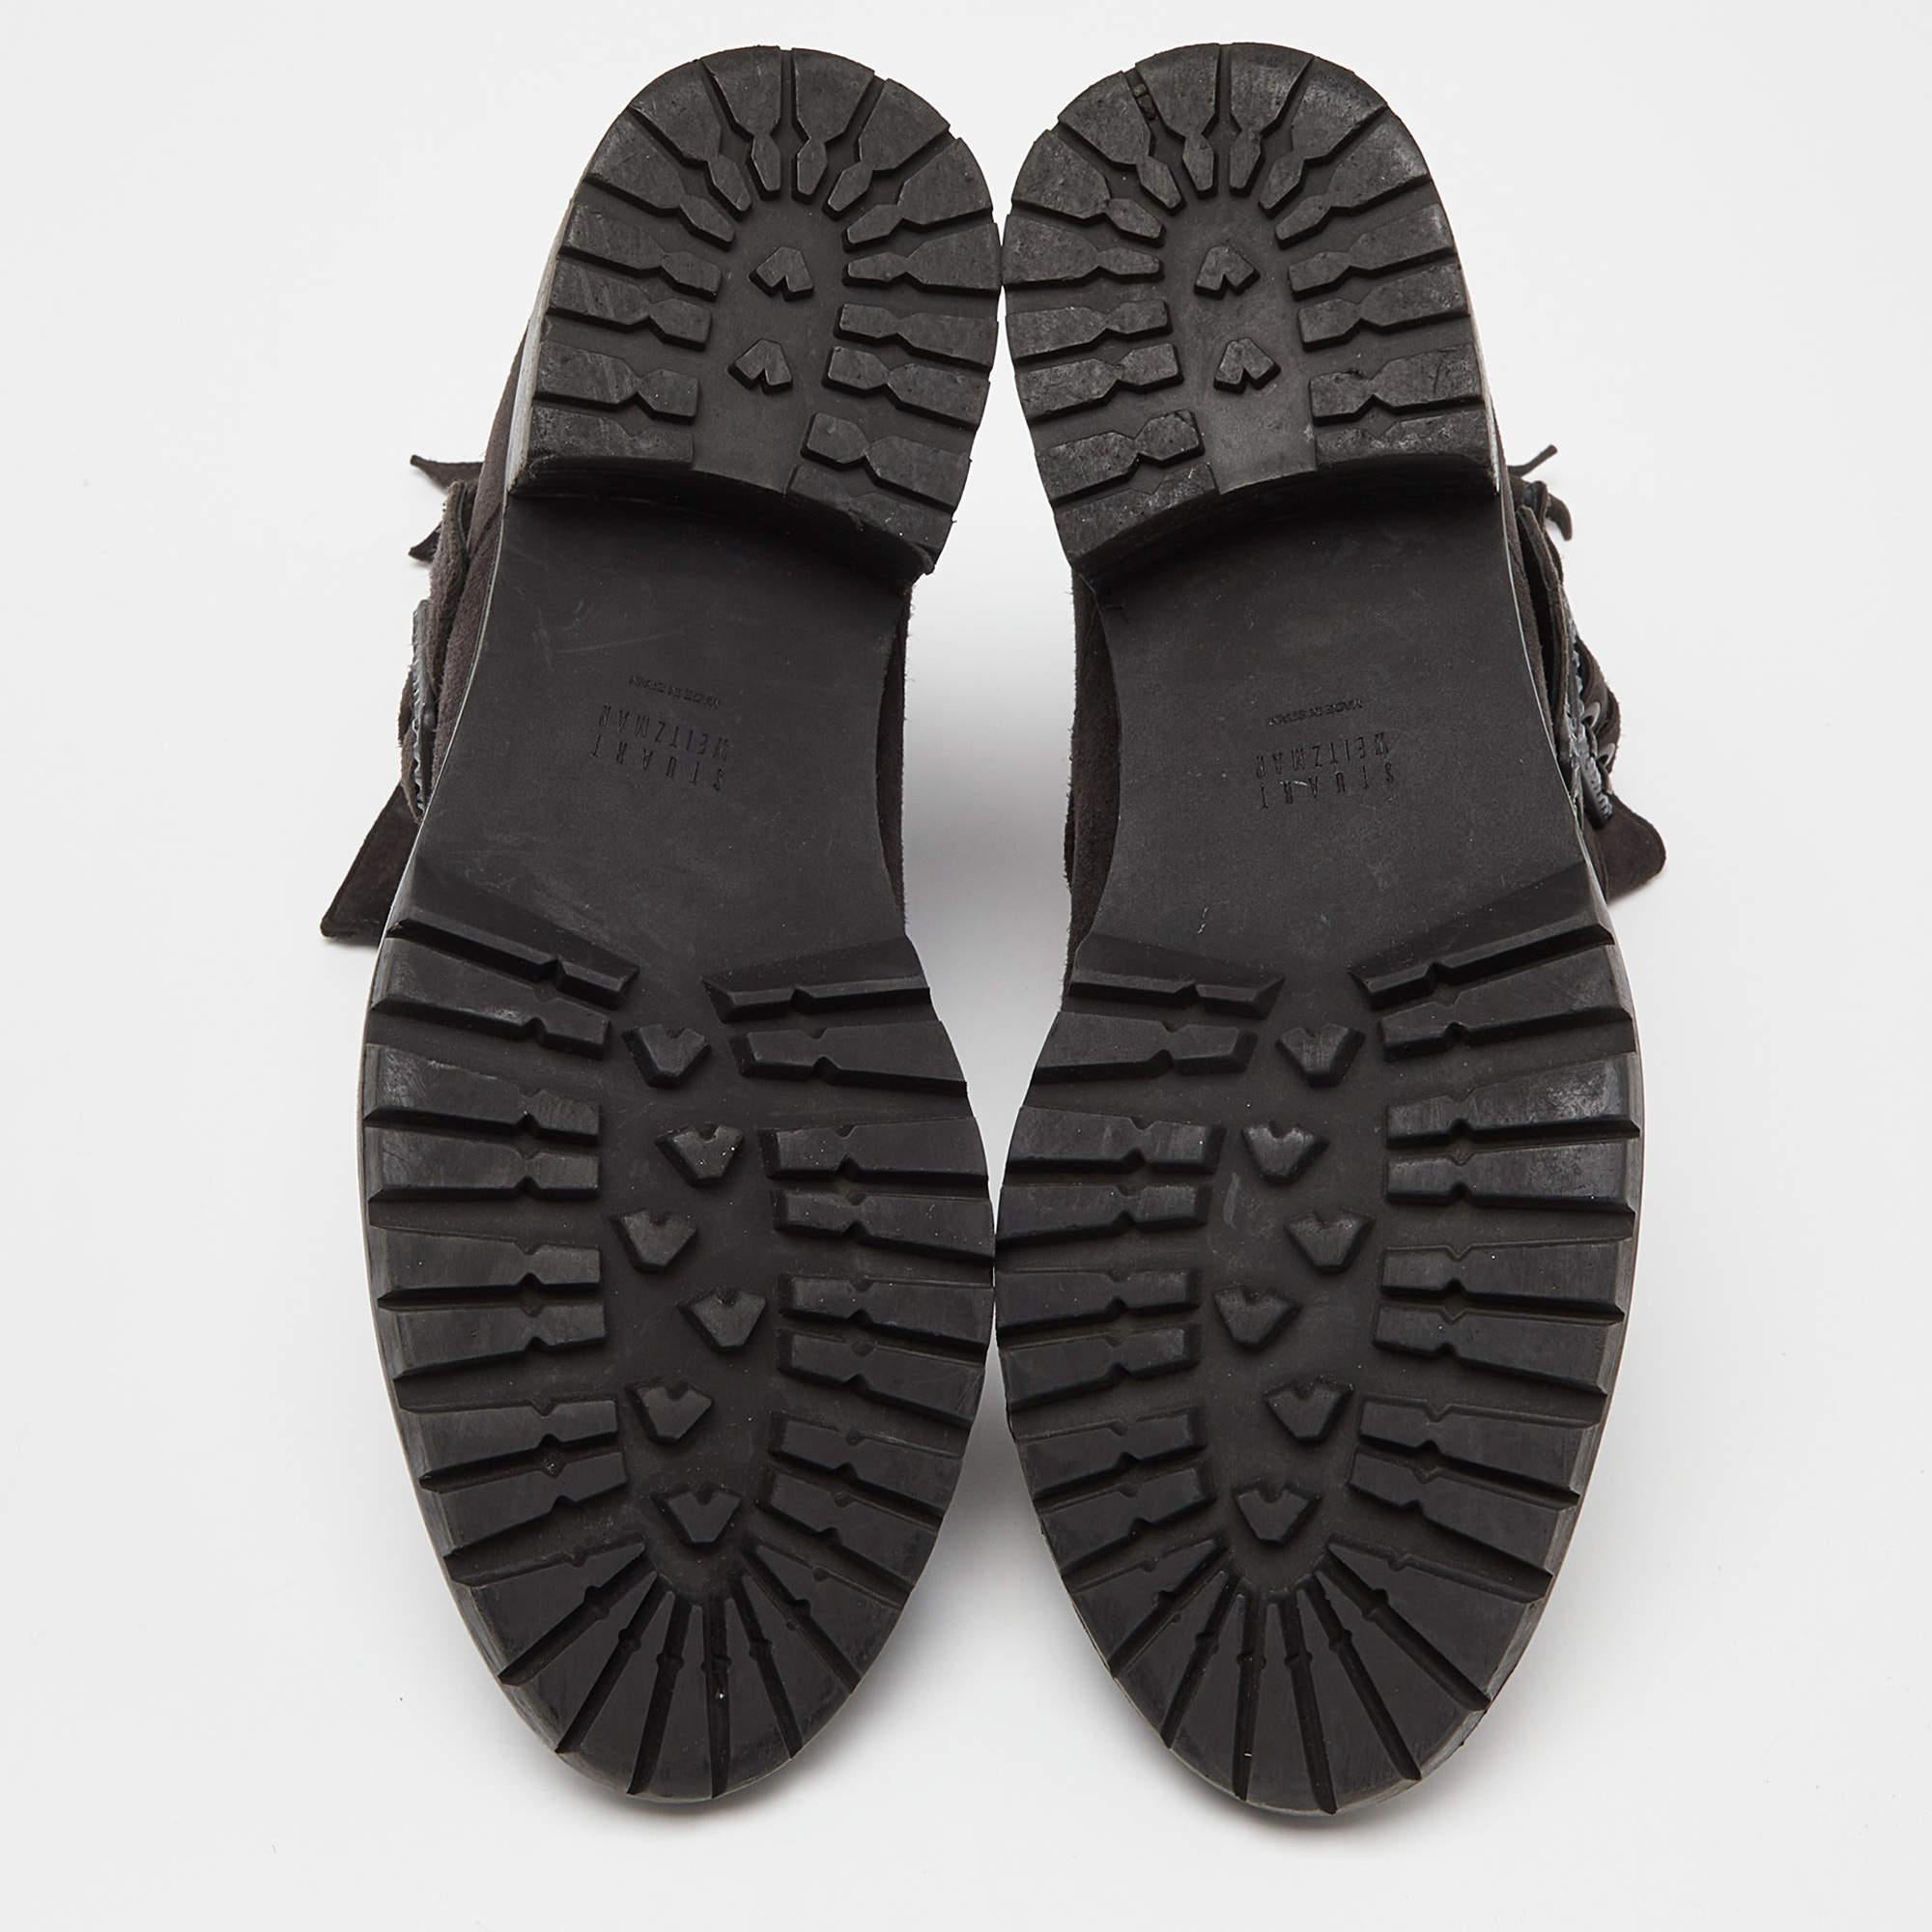 Stuart Weitzman Black Suede Crystal Embellished Ankle Length Boots Size 37.5 3